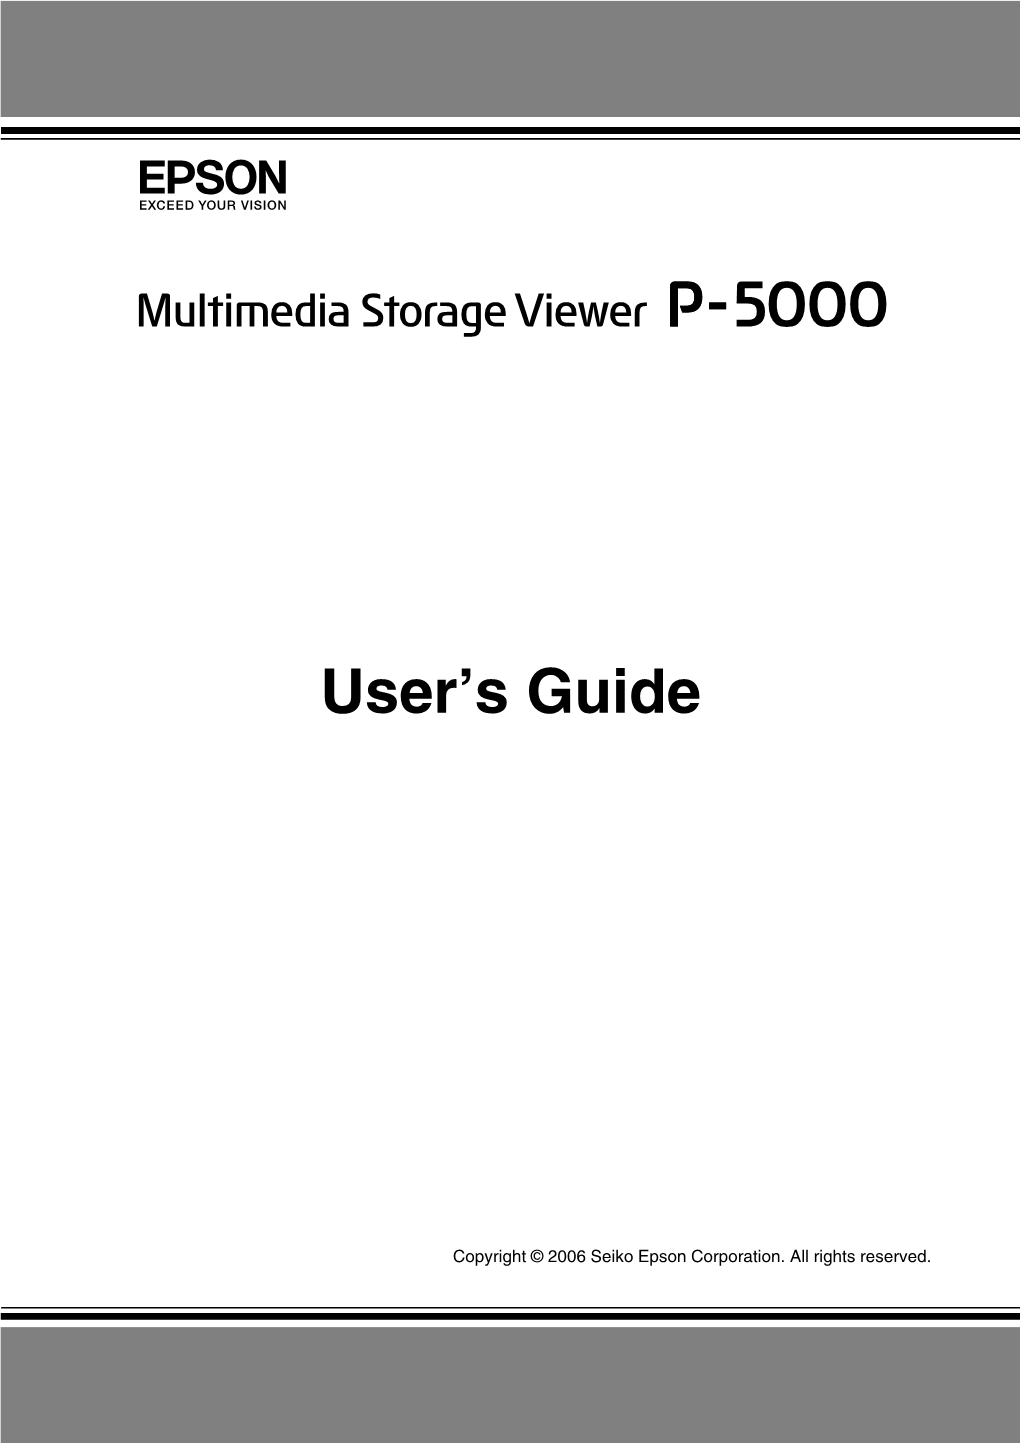 Multimedia Storge Viewer P-5000